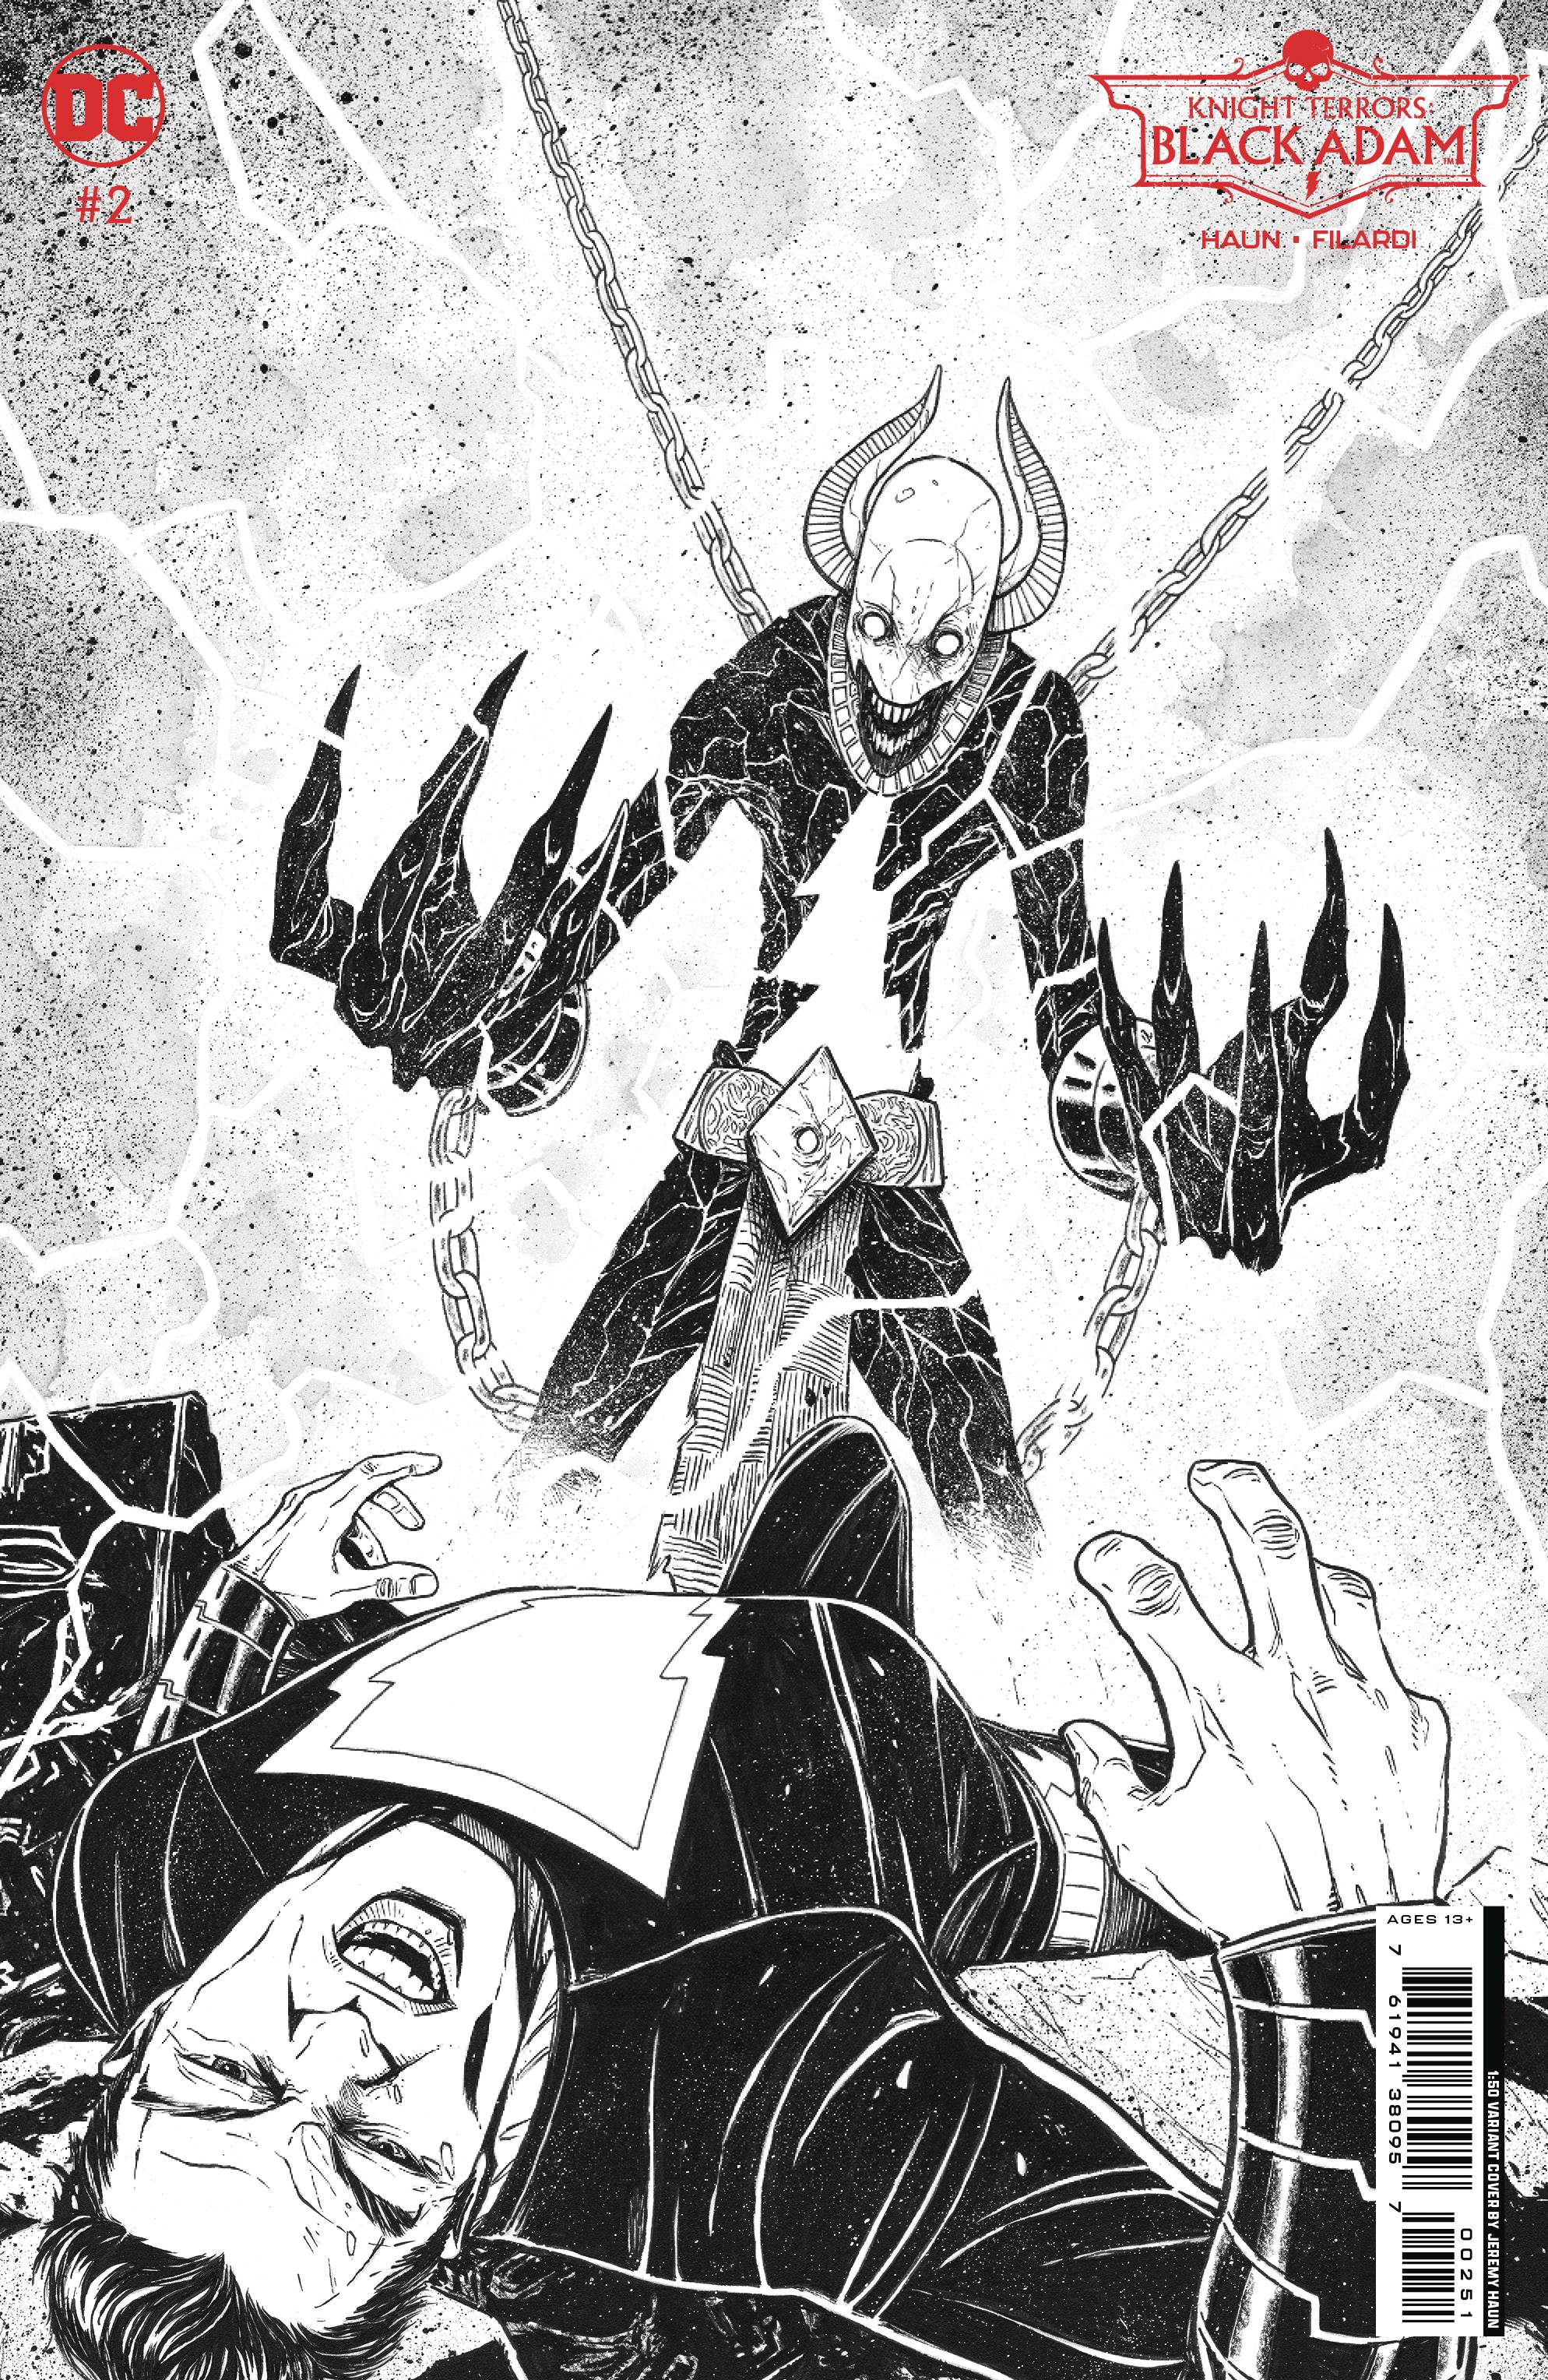 Review: Knight Terrors: Black Adam #1 - DC Comics News